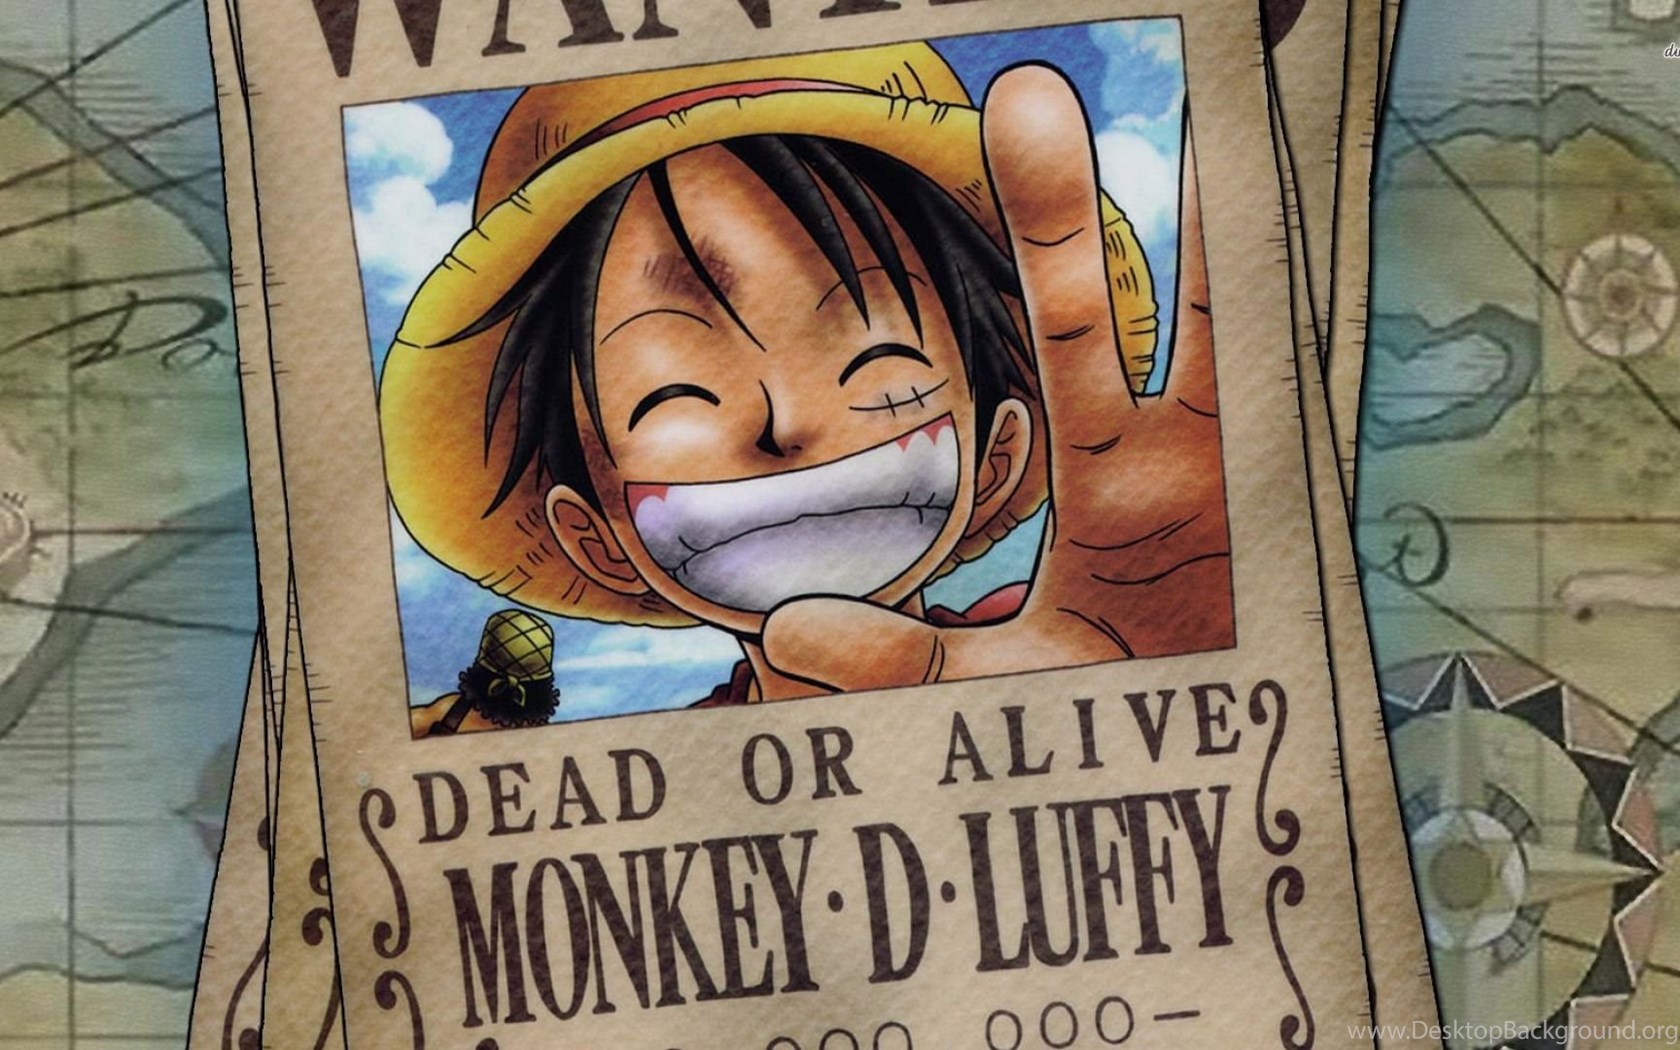 Monkey D. Luffy One Piece Wallpaper Anime Wallpaper Desktop Background